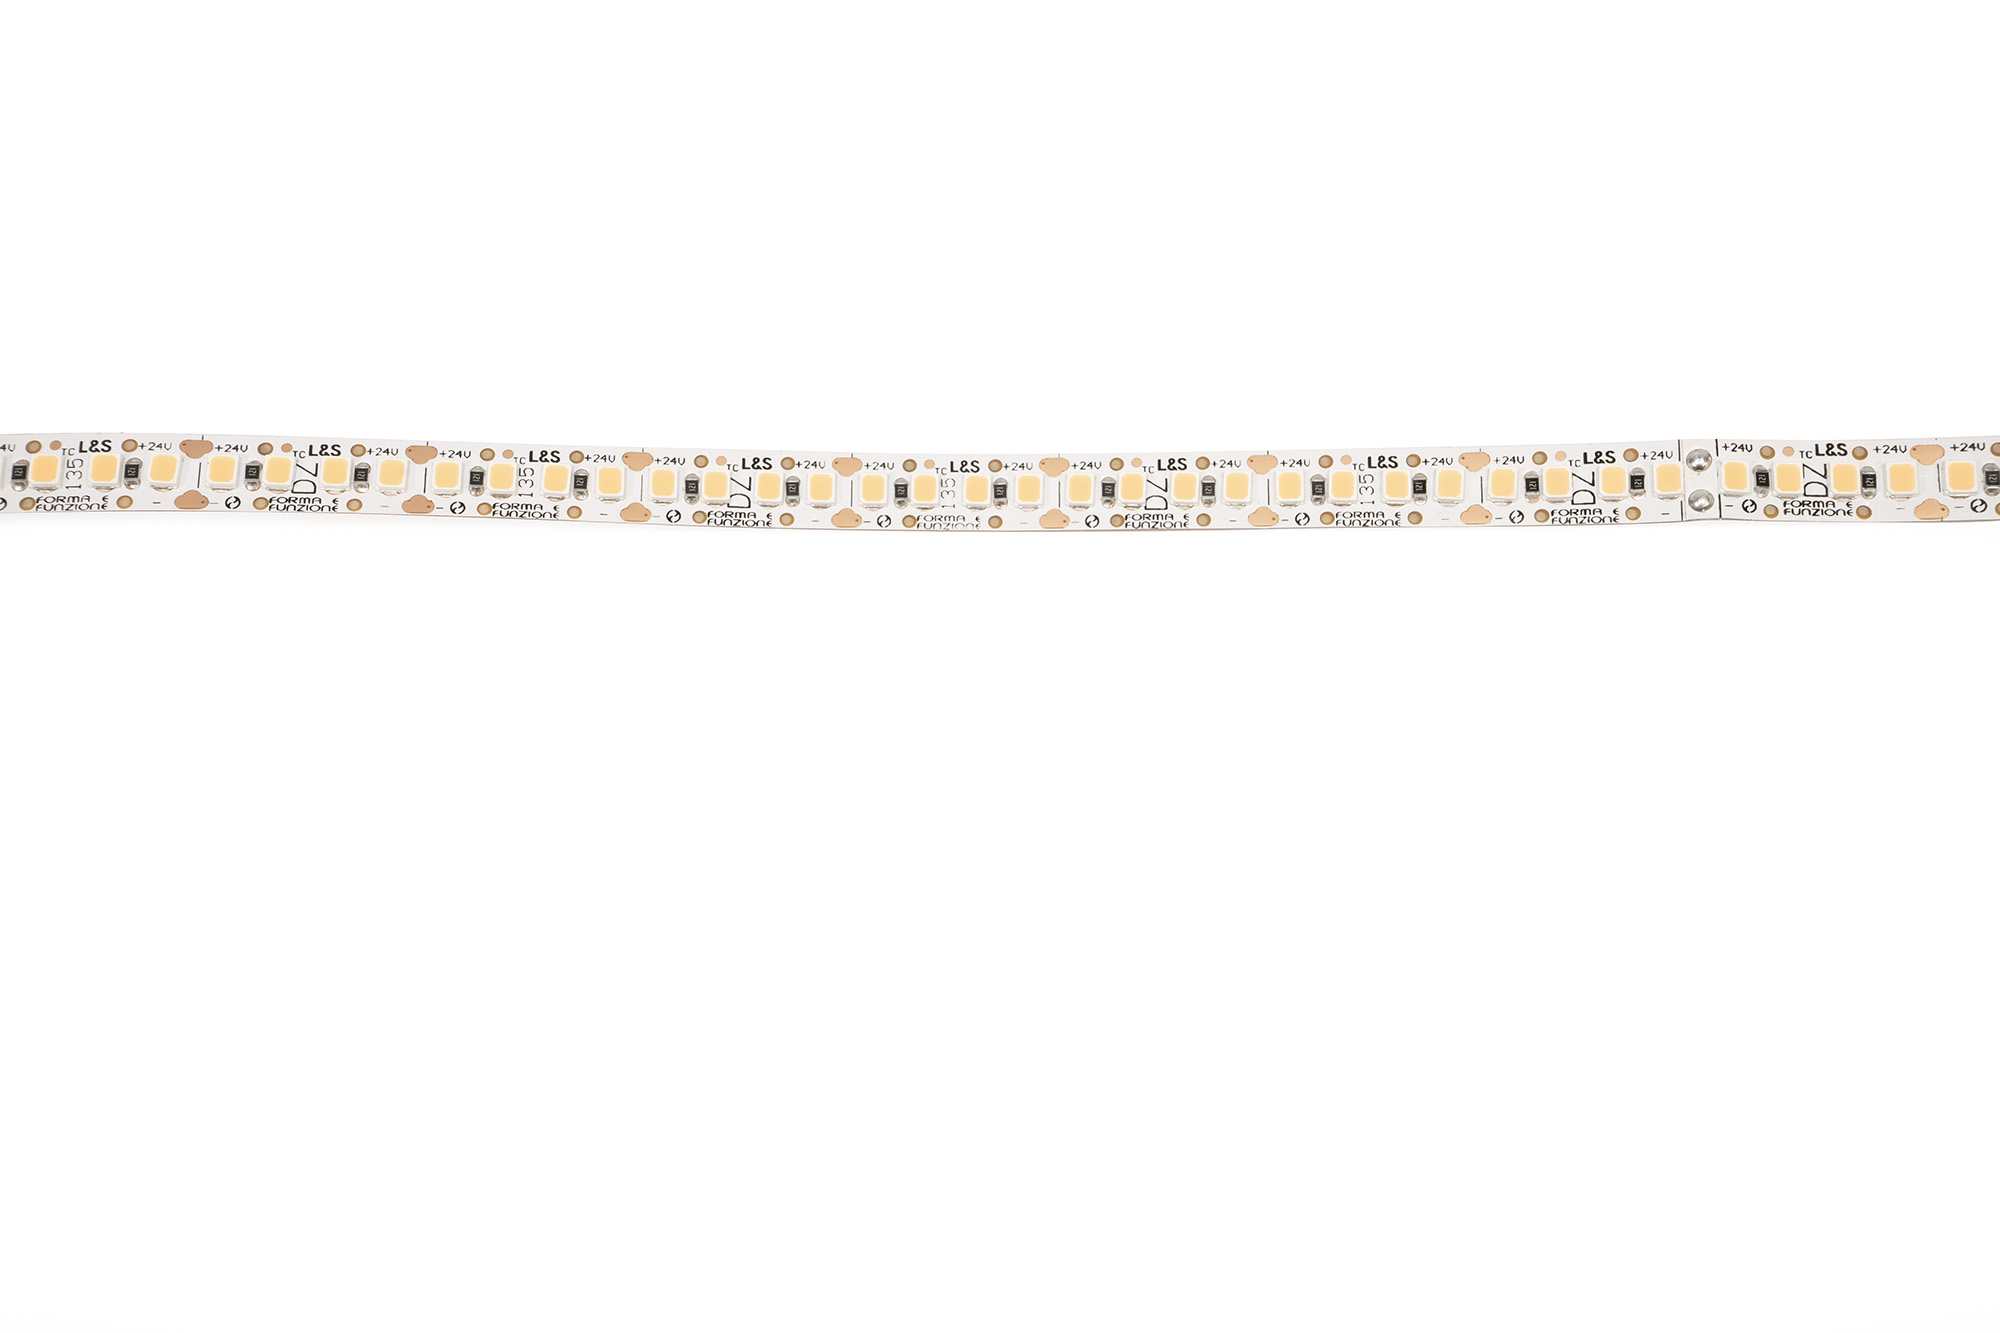 L&S LED-Band HE 200LEDs/m (2835), 2700K, 4LEDs/20mm, 24DC, 11,5W/m, 8mmx300mm, 1x Anschlussltg. 200mm, white PCB, IP20